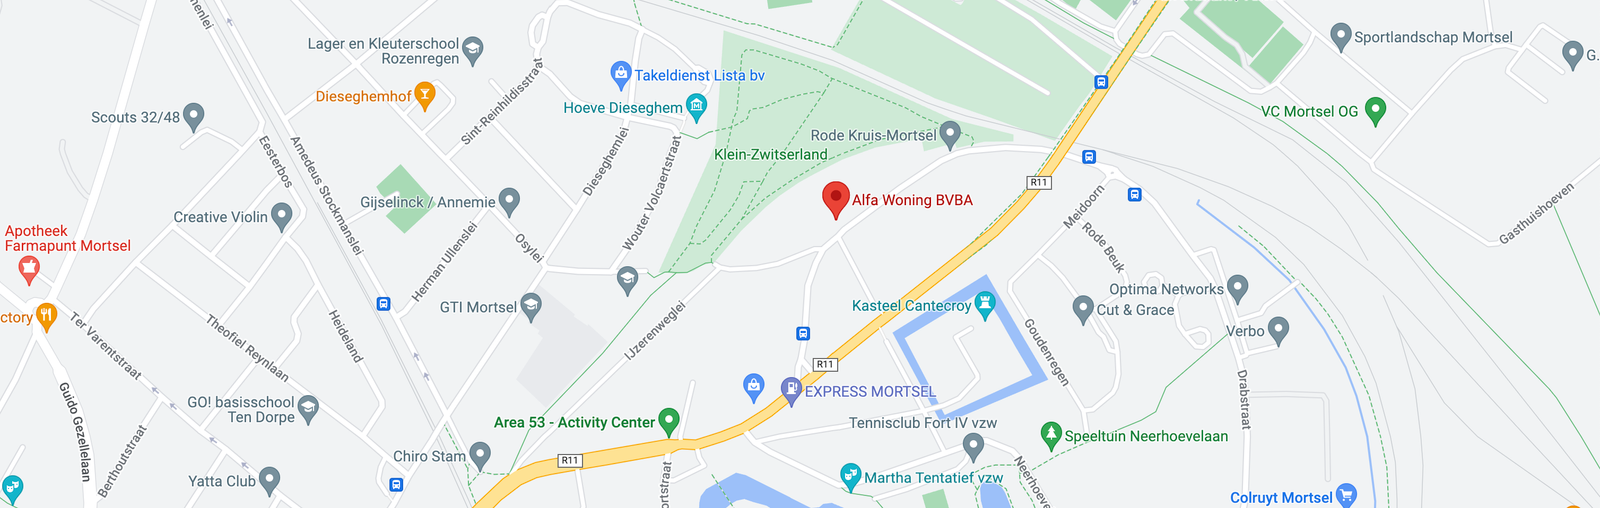 Alfa Woning BVBA location on google maps